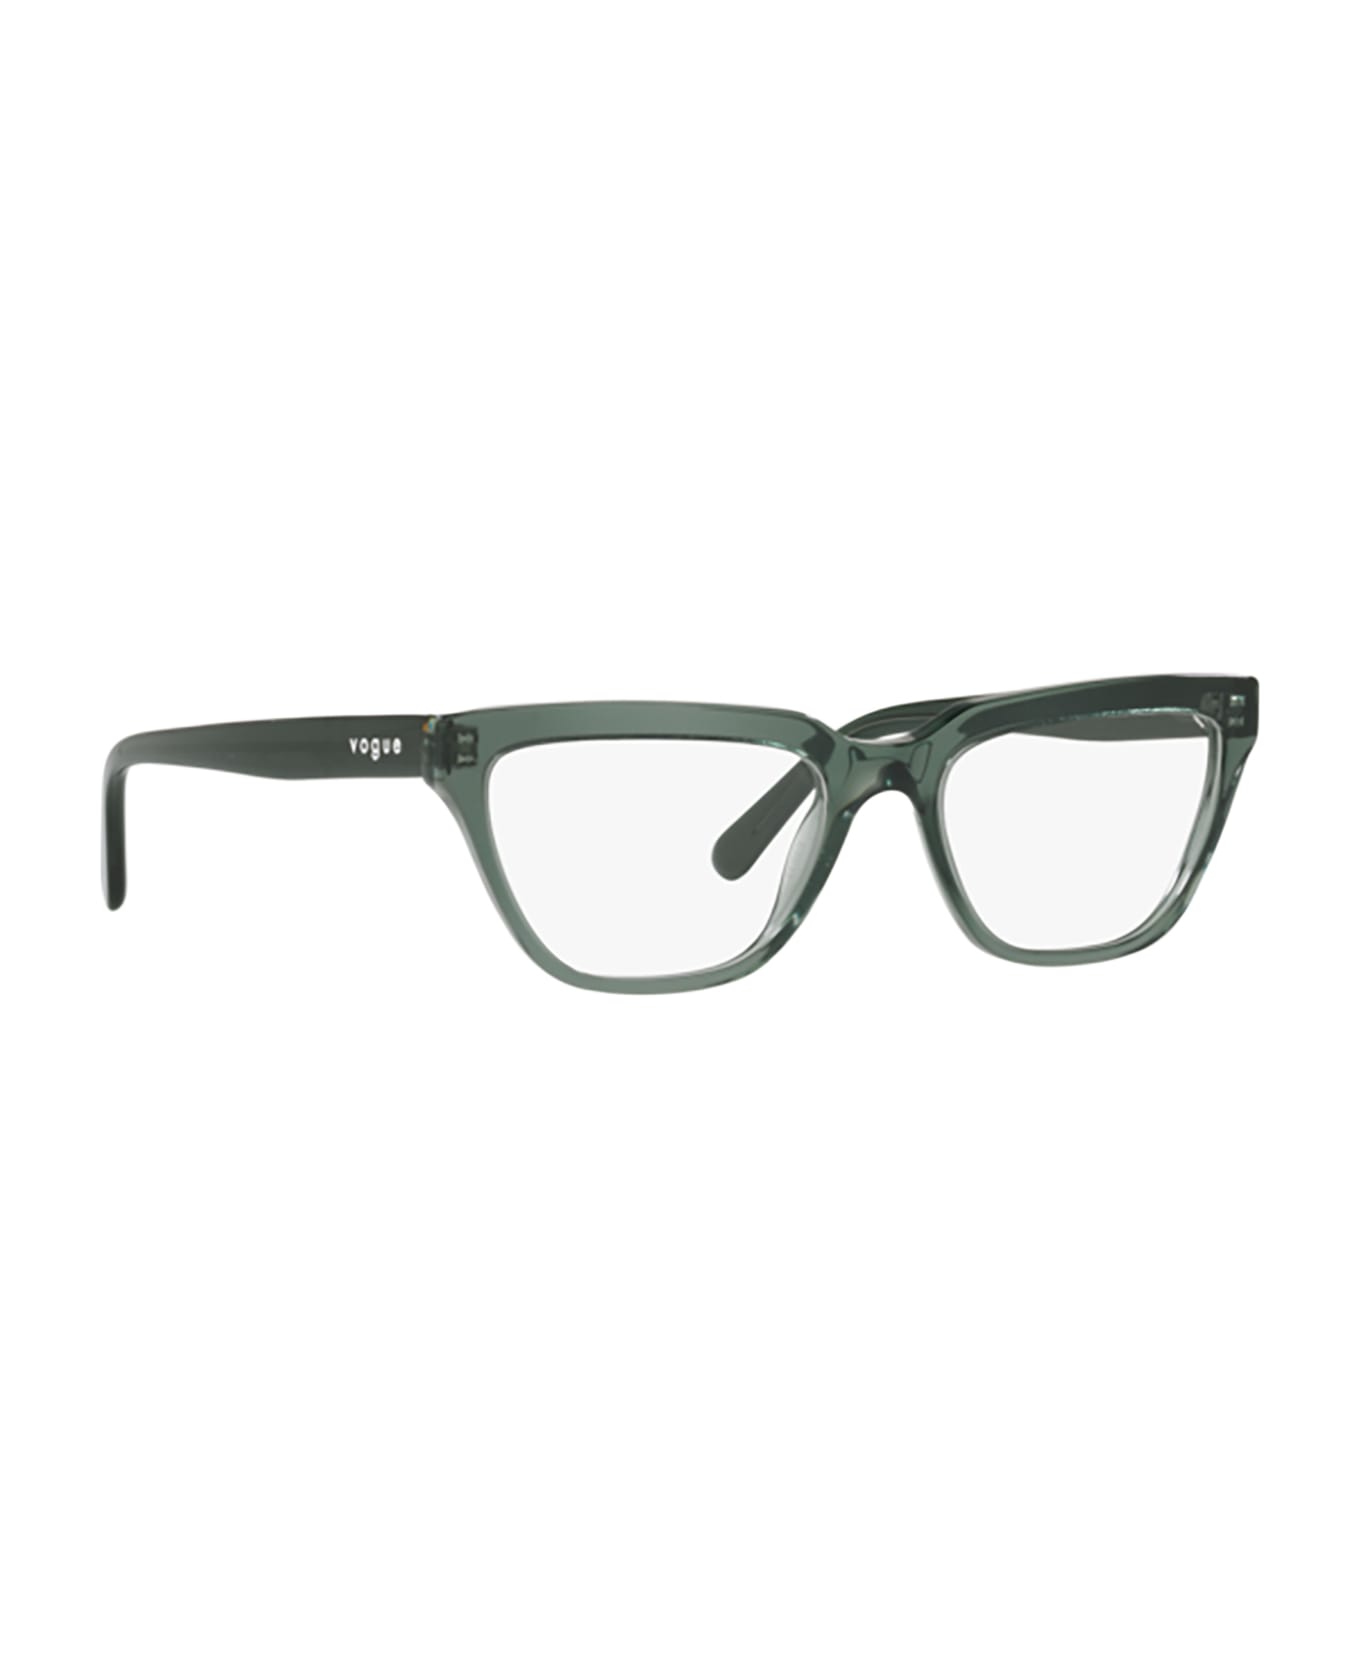 Vogue Eyewear Vo5443 Transparent Green Glasses - Transparent Green